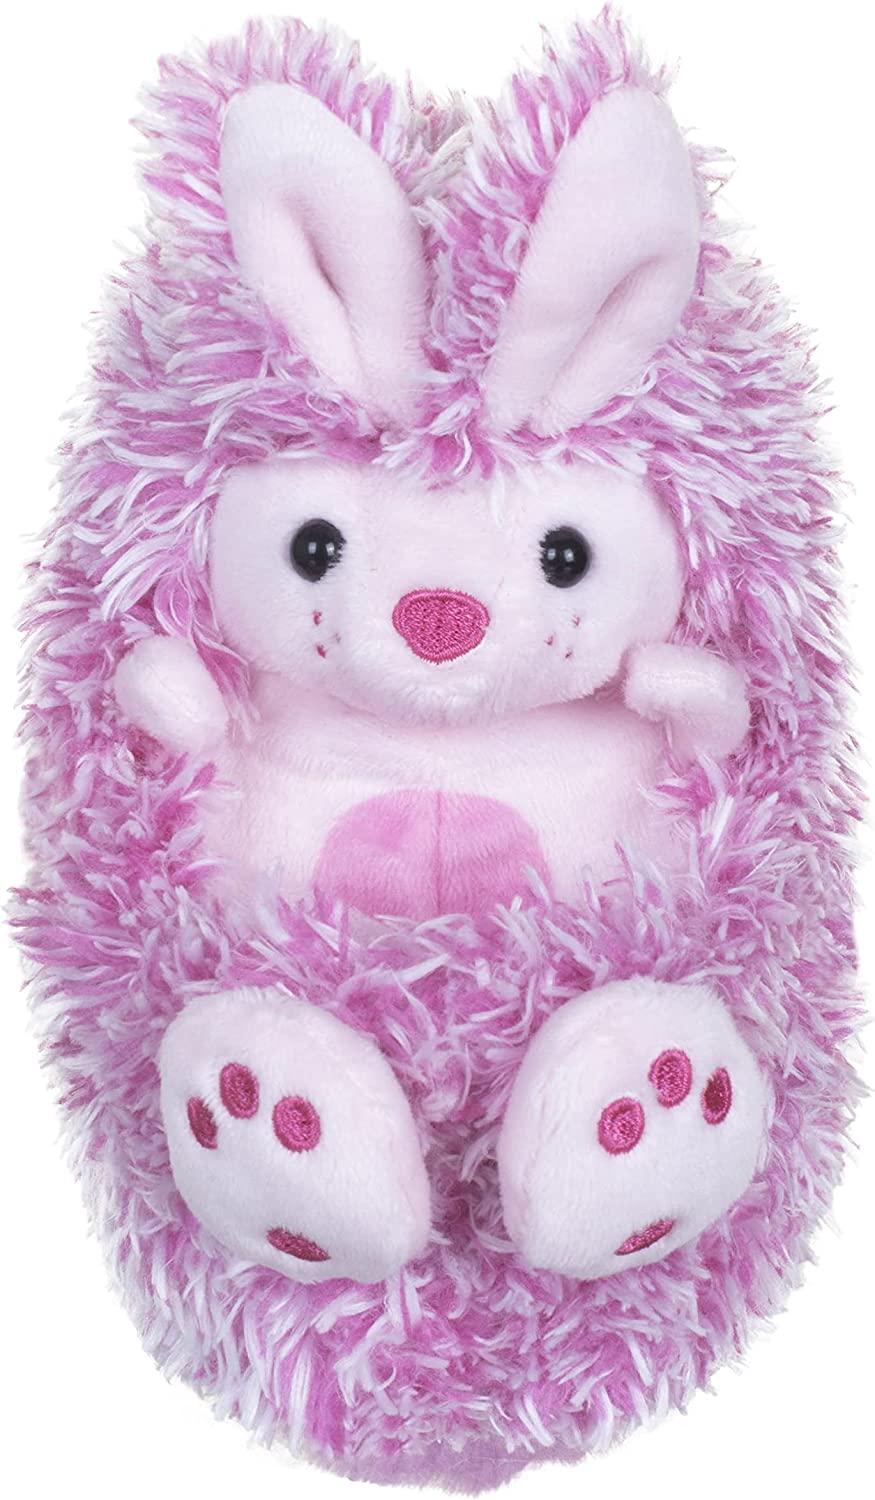 Curlimals BIBI The Bunny Interactive Rabbit Soft Toy